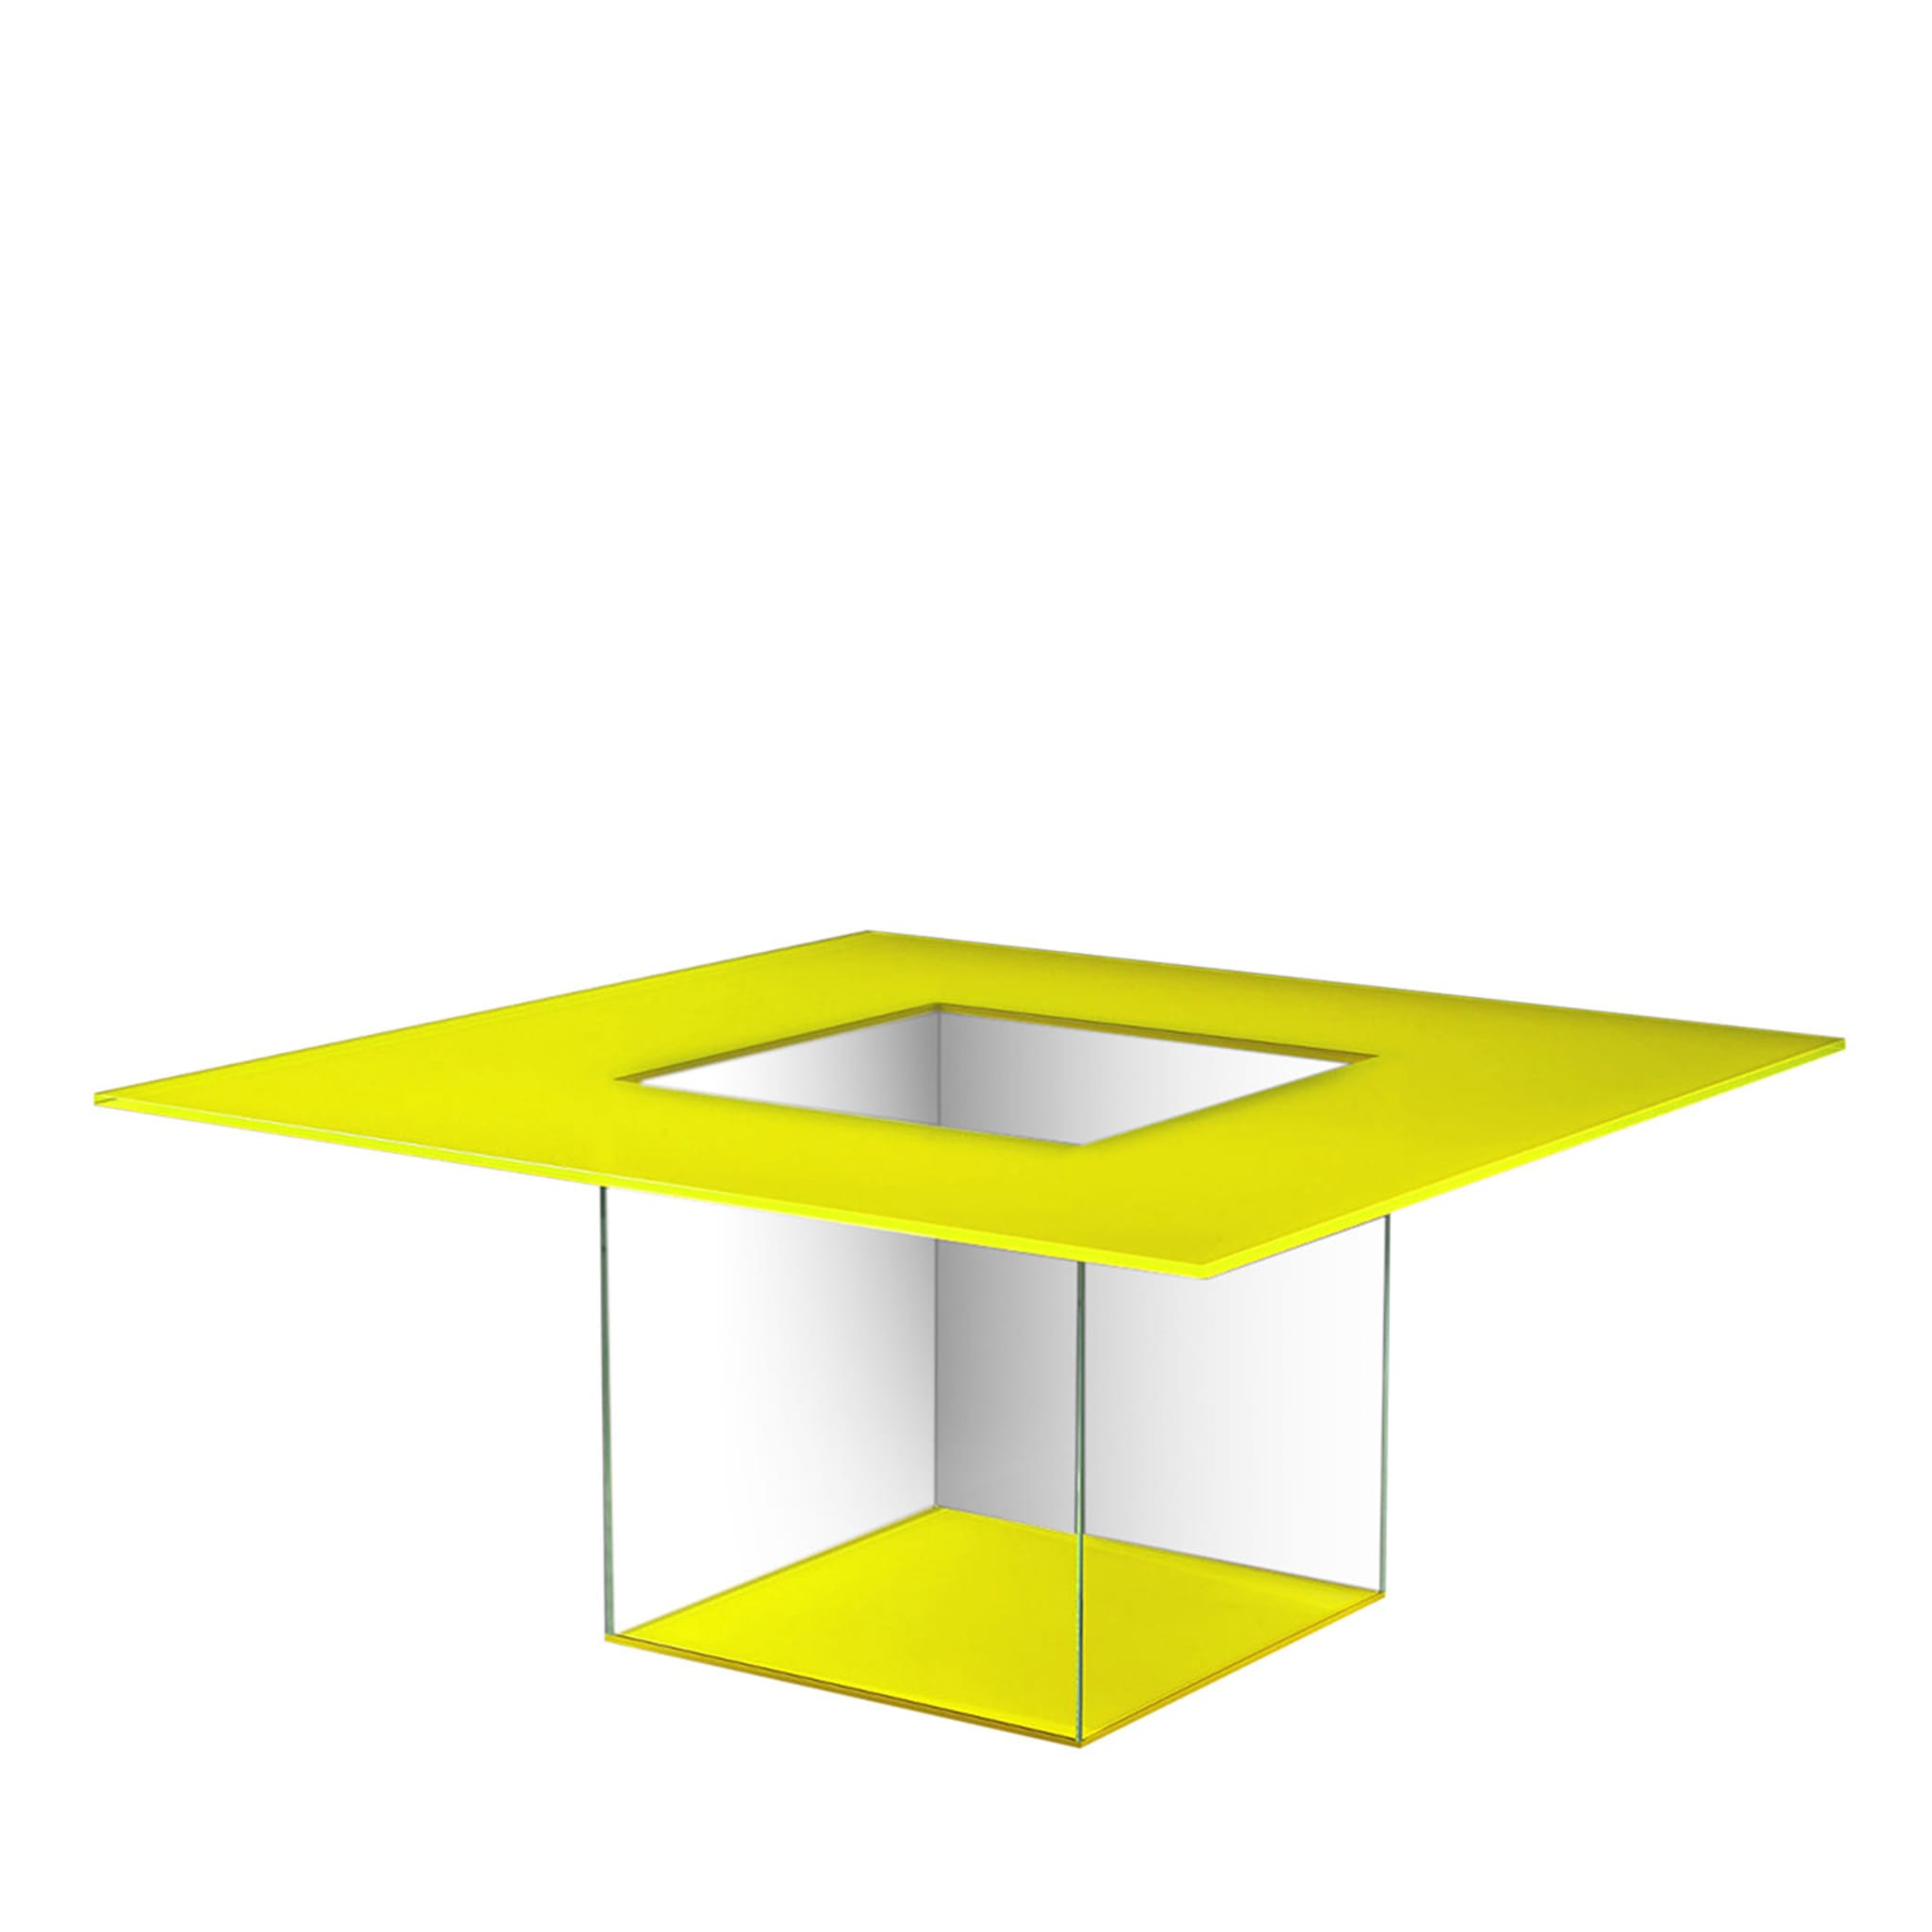 Icaro Quadro Yellow Dining Table by Daniele Merini - Main view